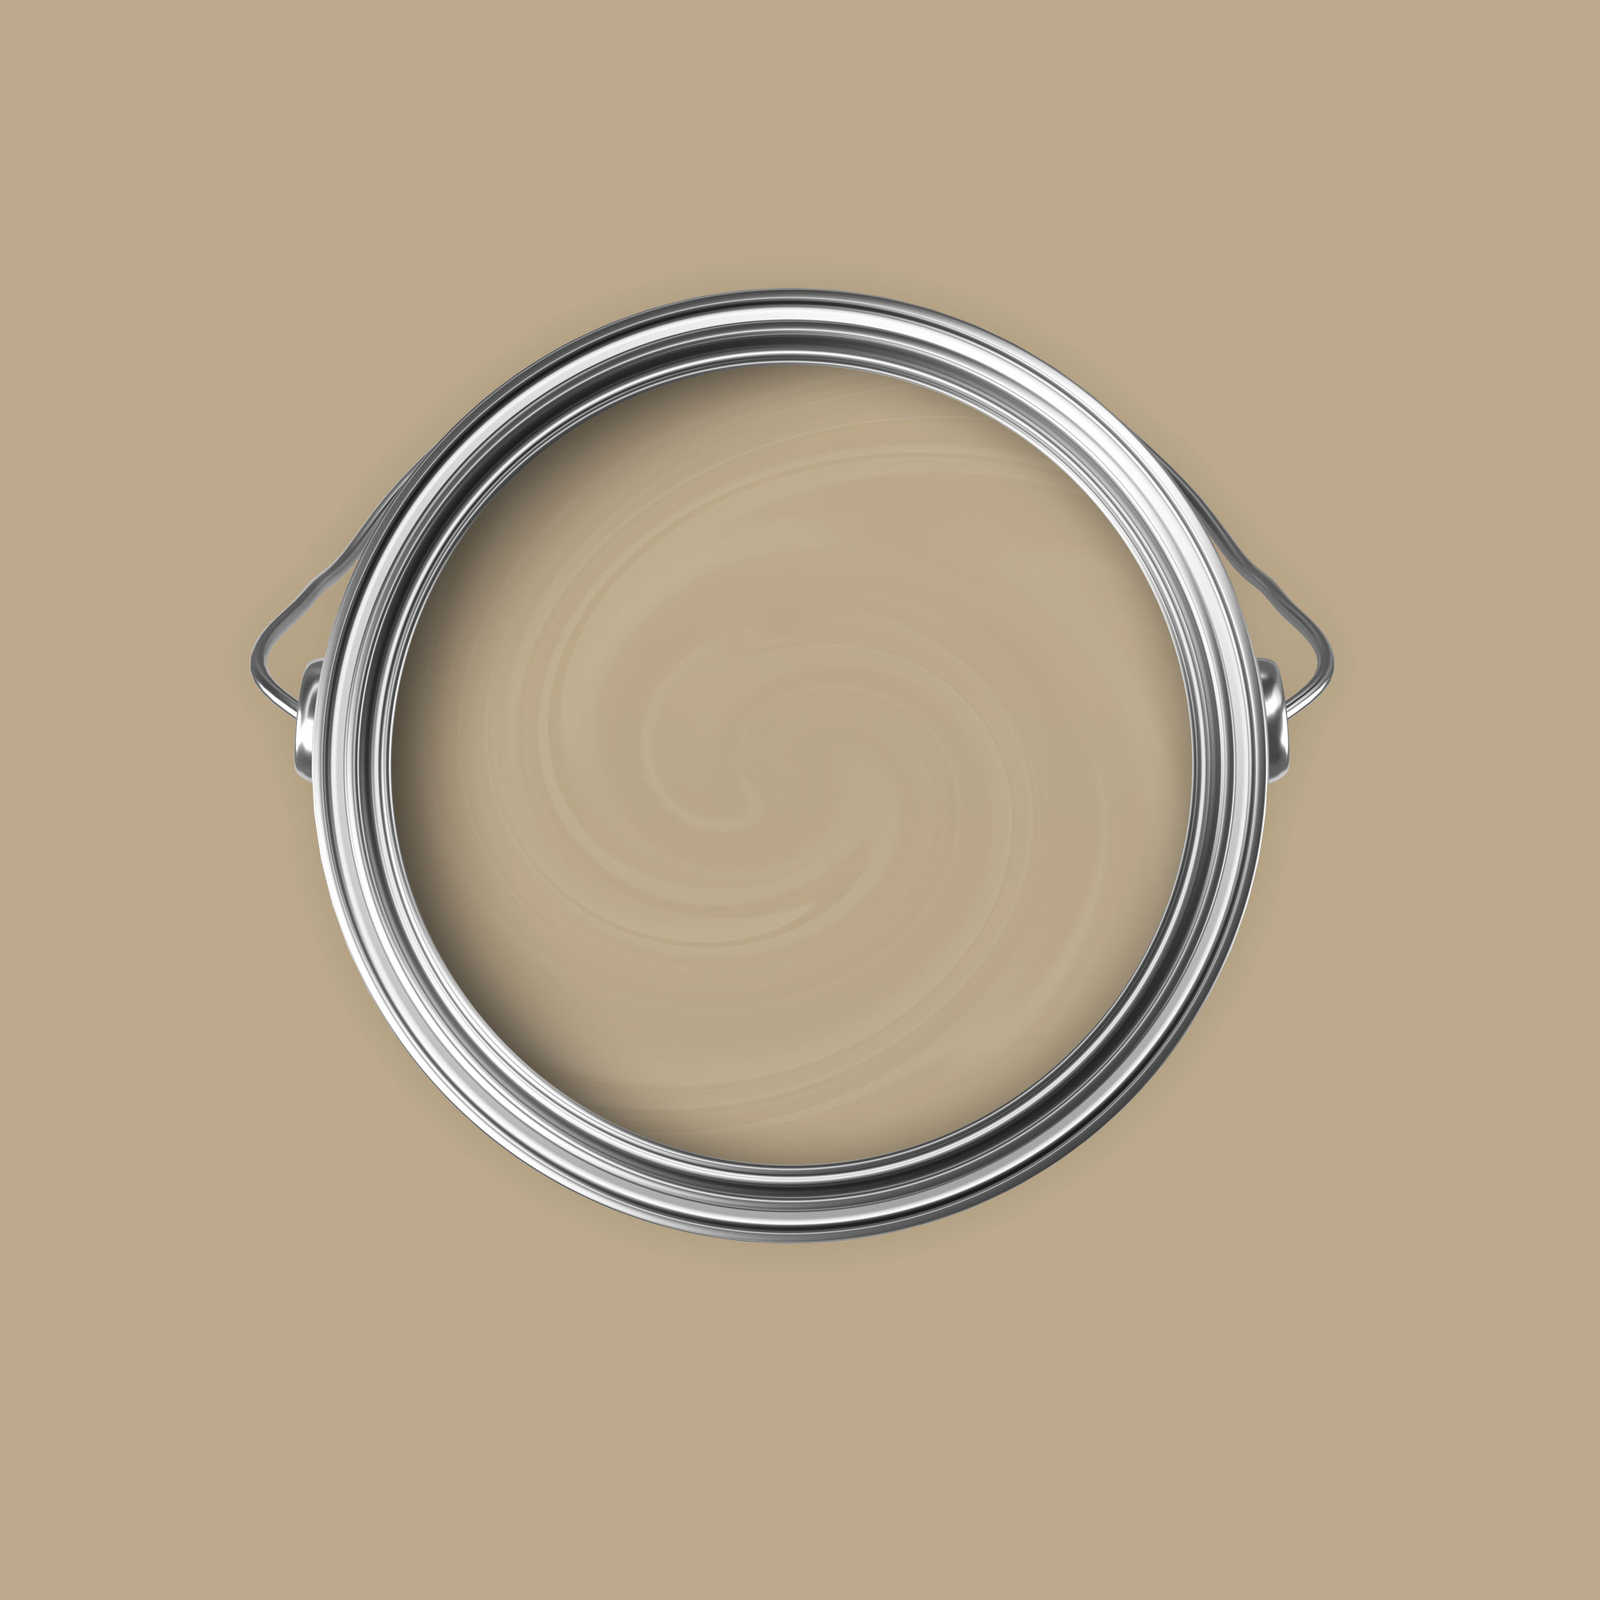             Premium Muurverf nuchter cappuccino »Essential Earth« NW709 – 5 liter
        